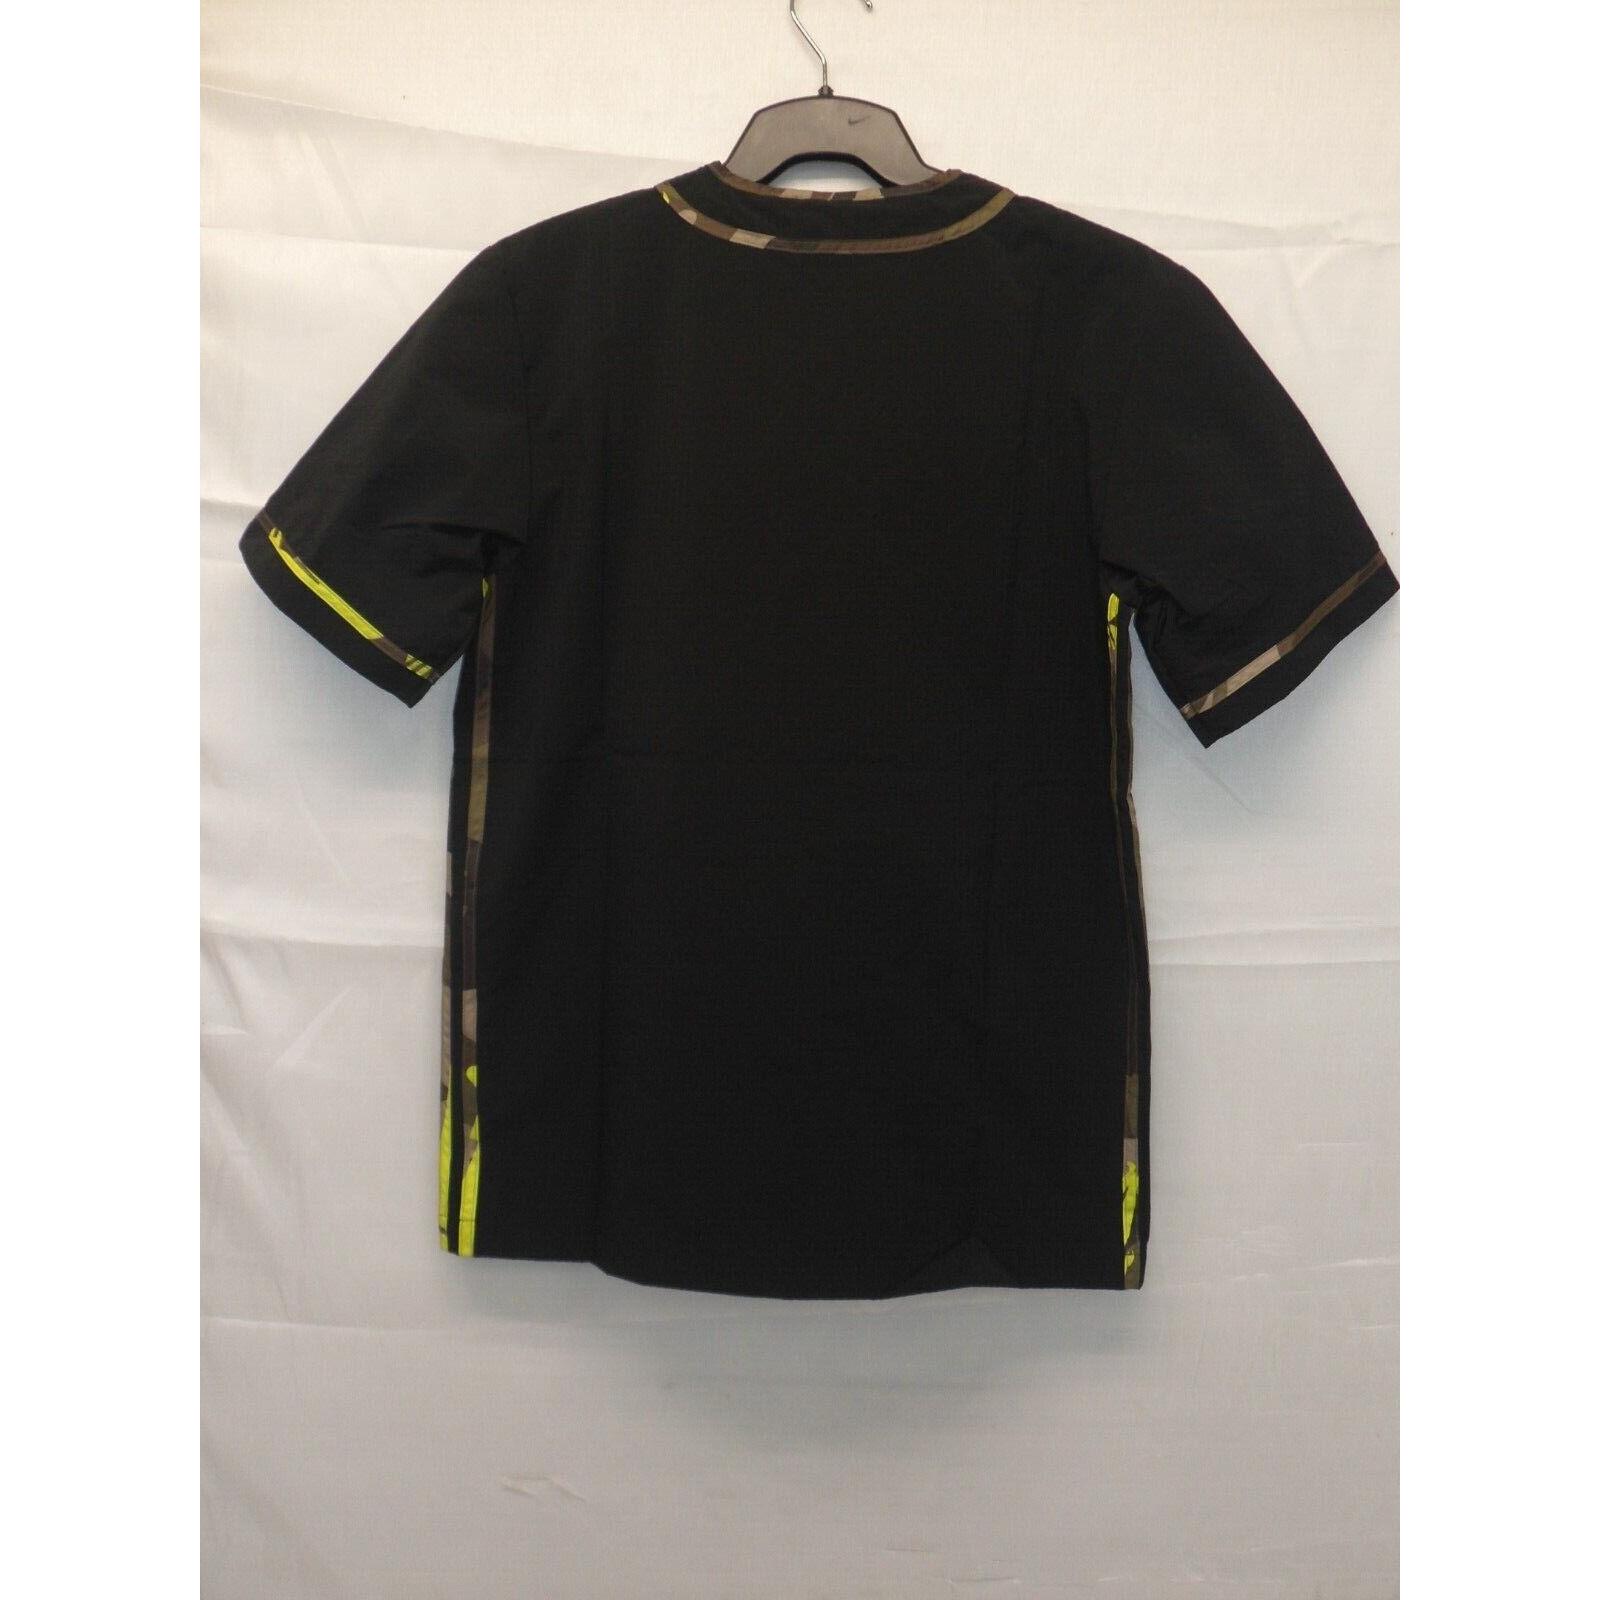 Adidas clothing Camo Shirt - Black 2